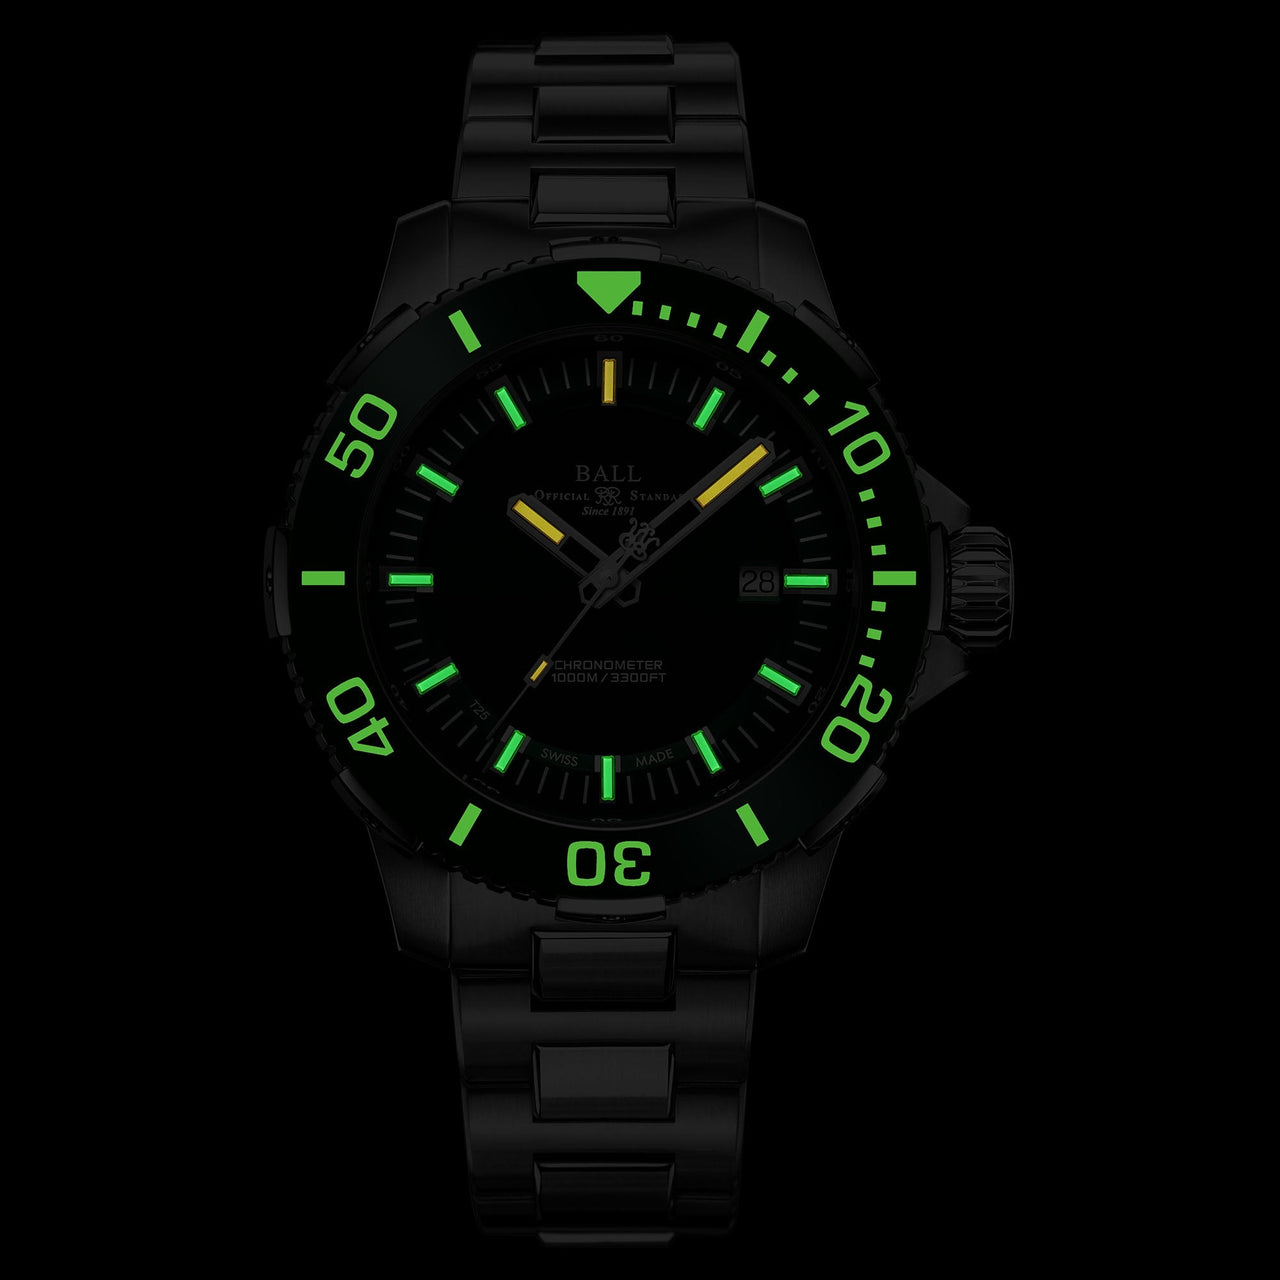 Automatic Watch - Ball Engineer Hydrocarbon Deep QUEST Ceramic Men's Green Watch DM3002A-S4CJ-GR